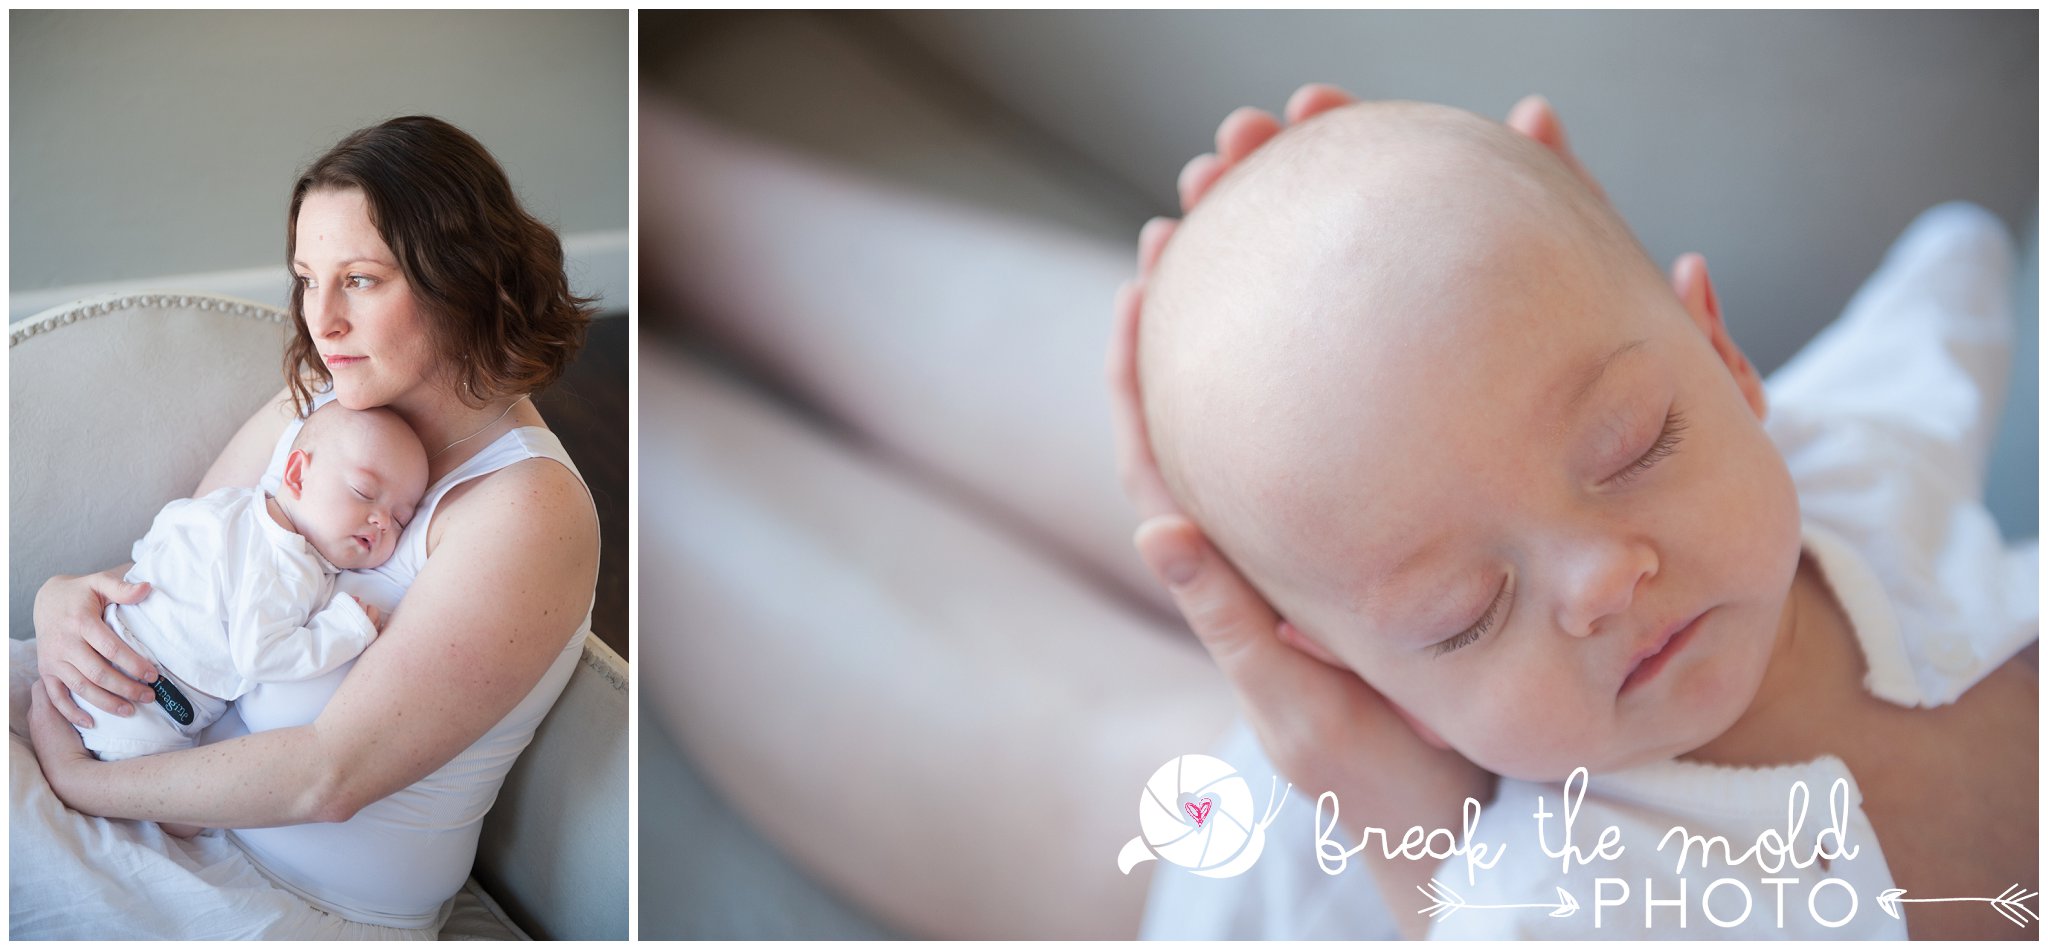 break-the-mold-photo-nursing-body-love-baby-pregnant-women-powerful-breastfeeding-sessions_7258.jpg